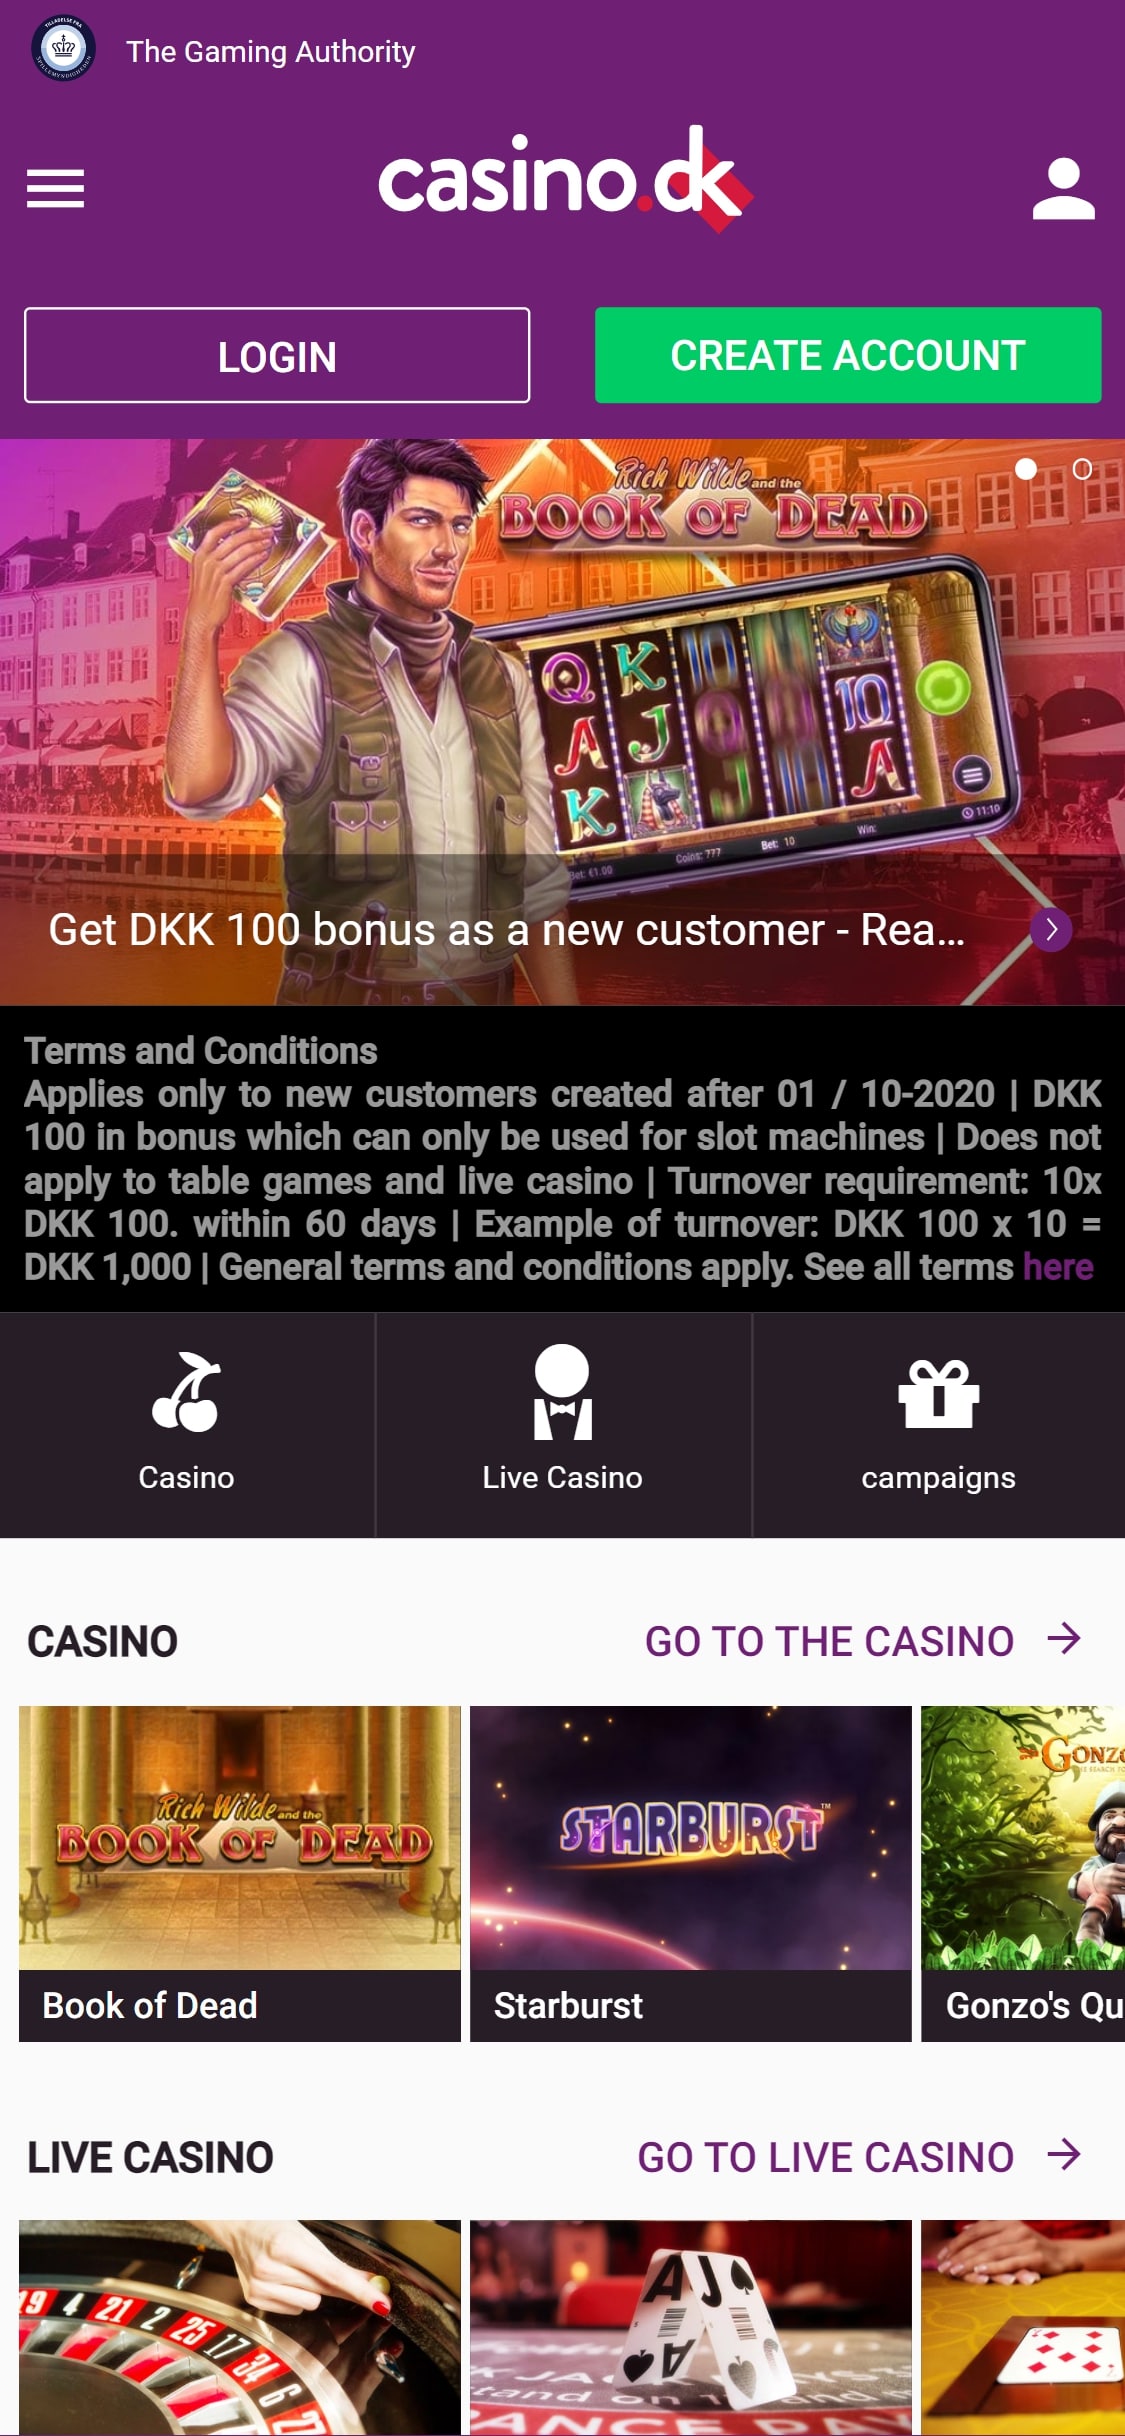 Casino DK Mobile Review